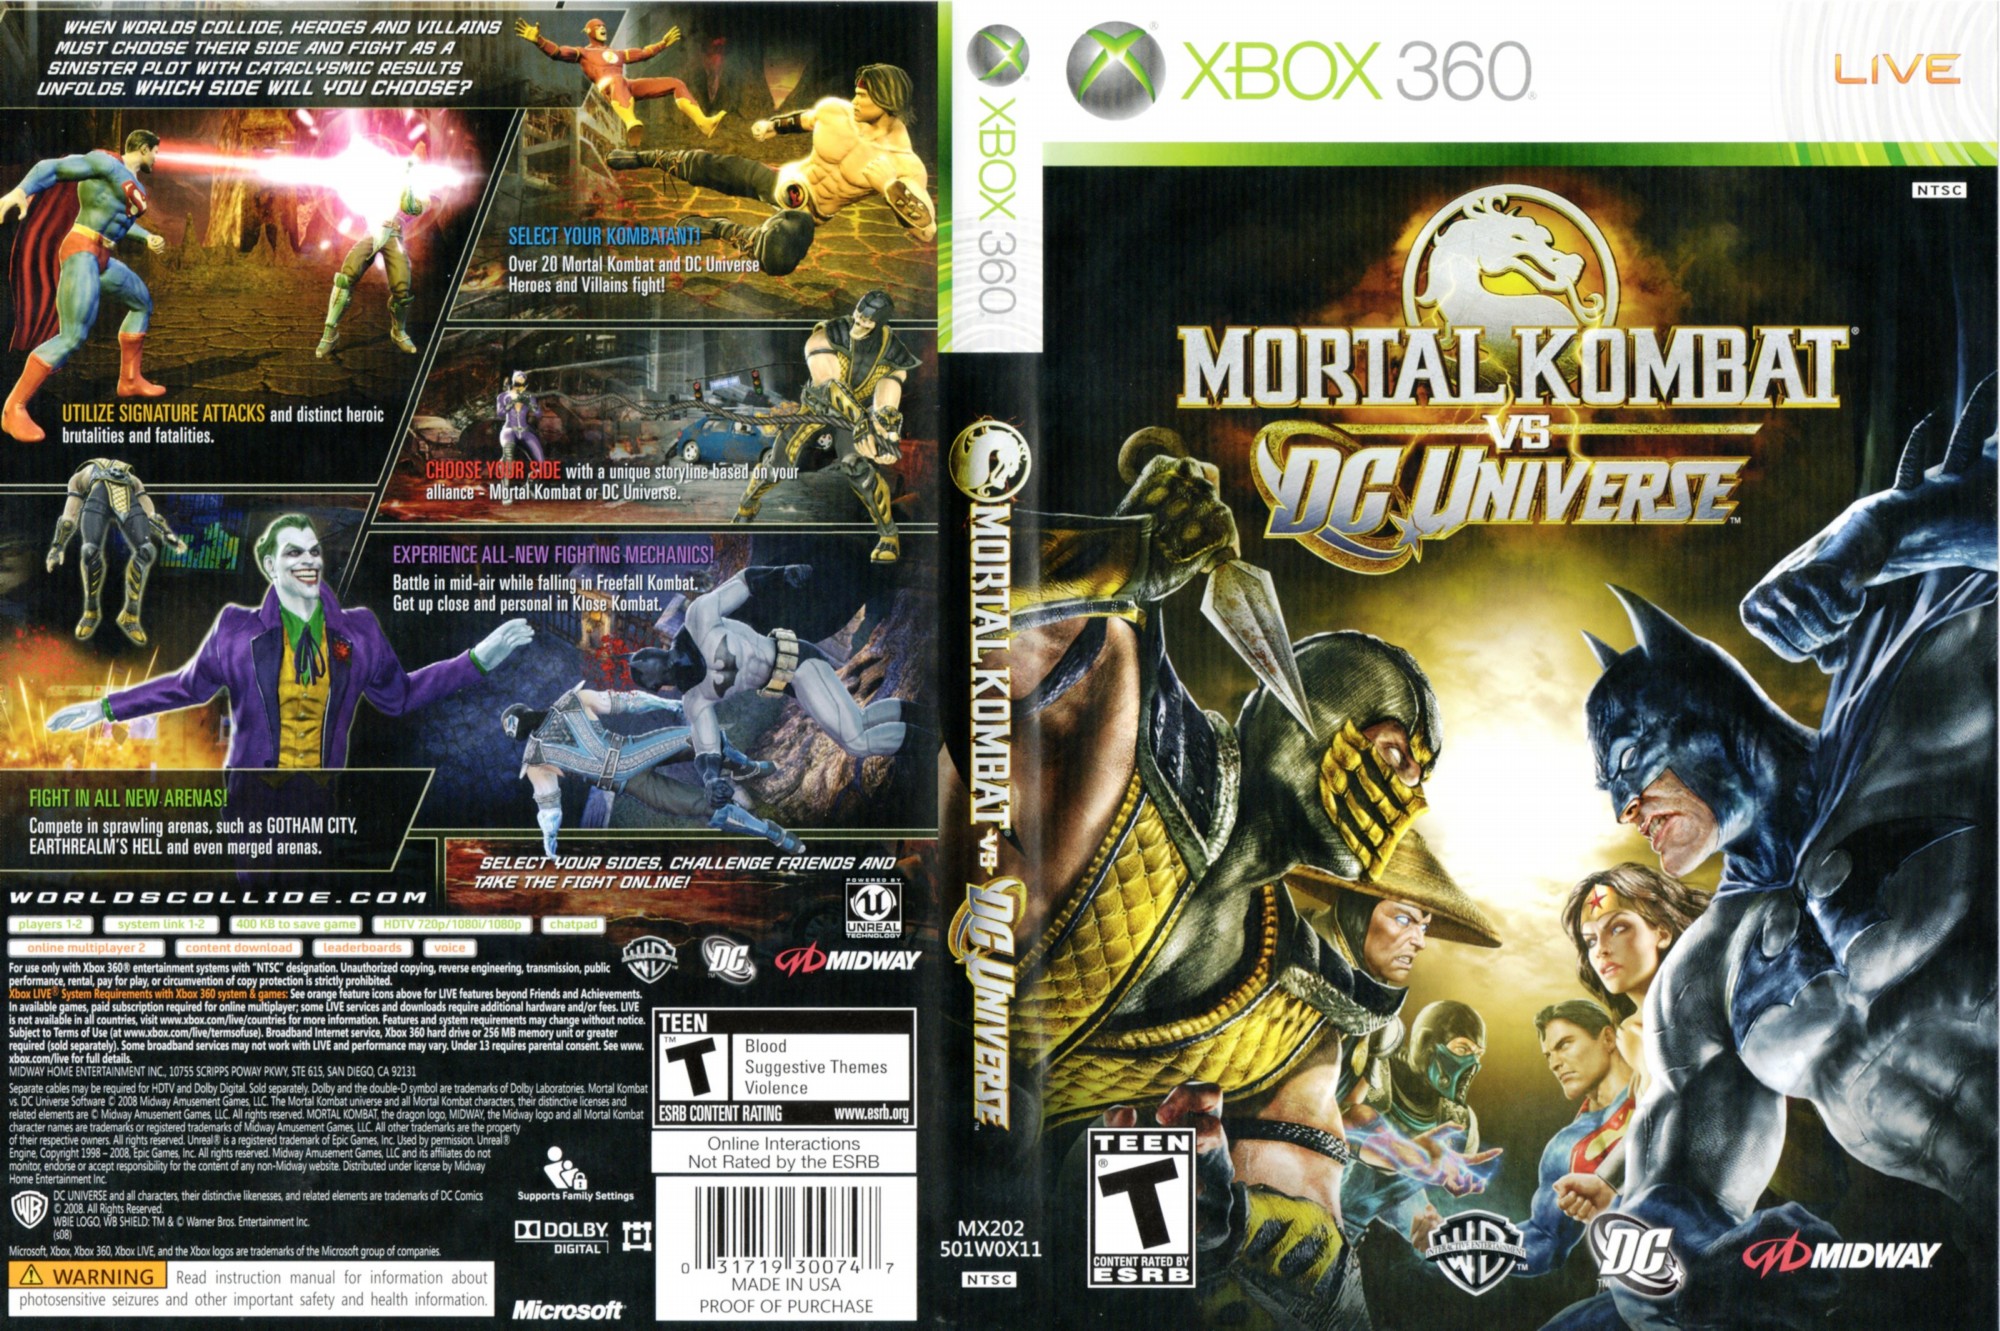 High Resolution Wallpaper | Mortal Kombat Vs. DC Universe 2000x1331 px